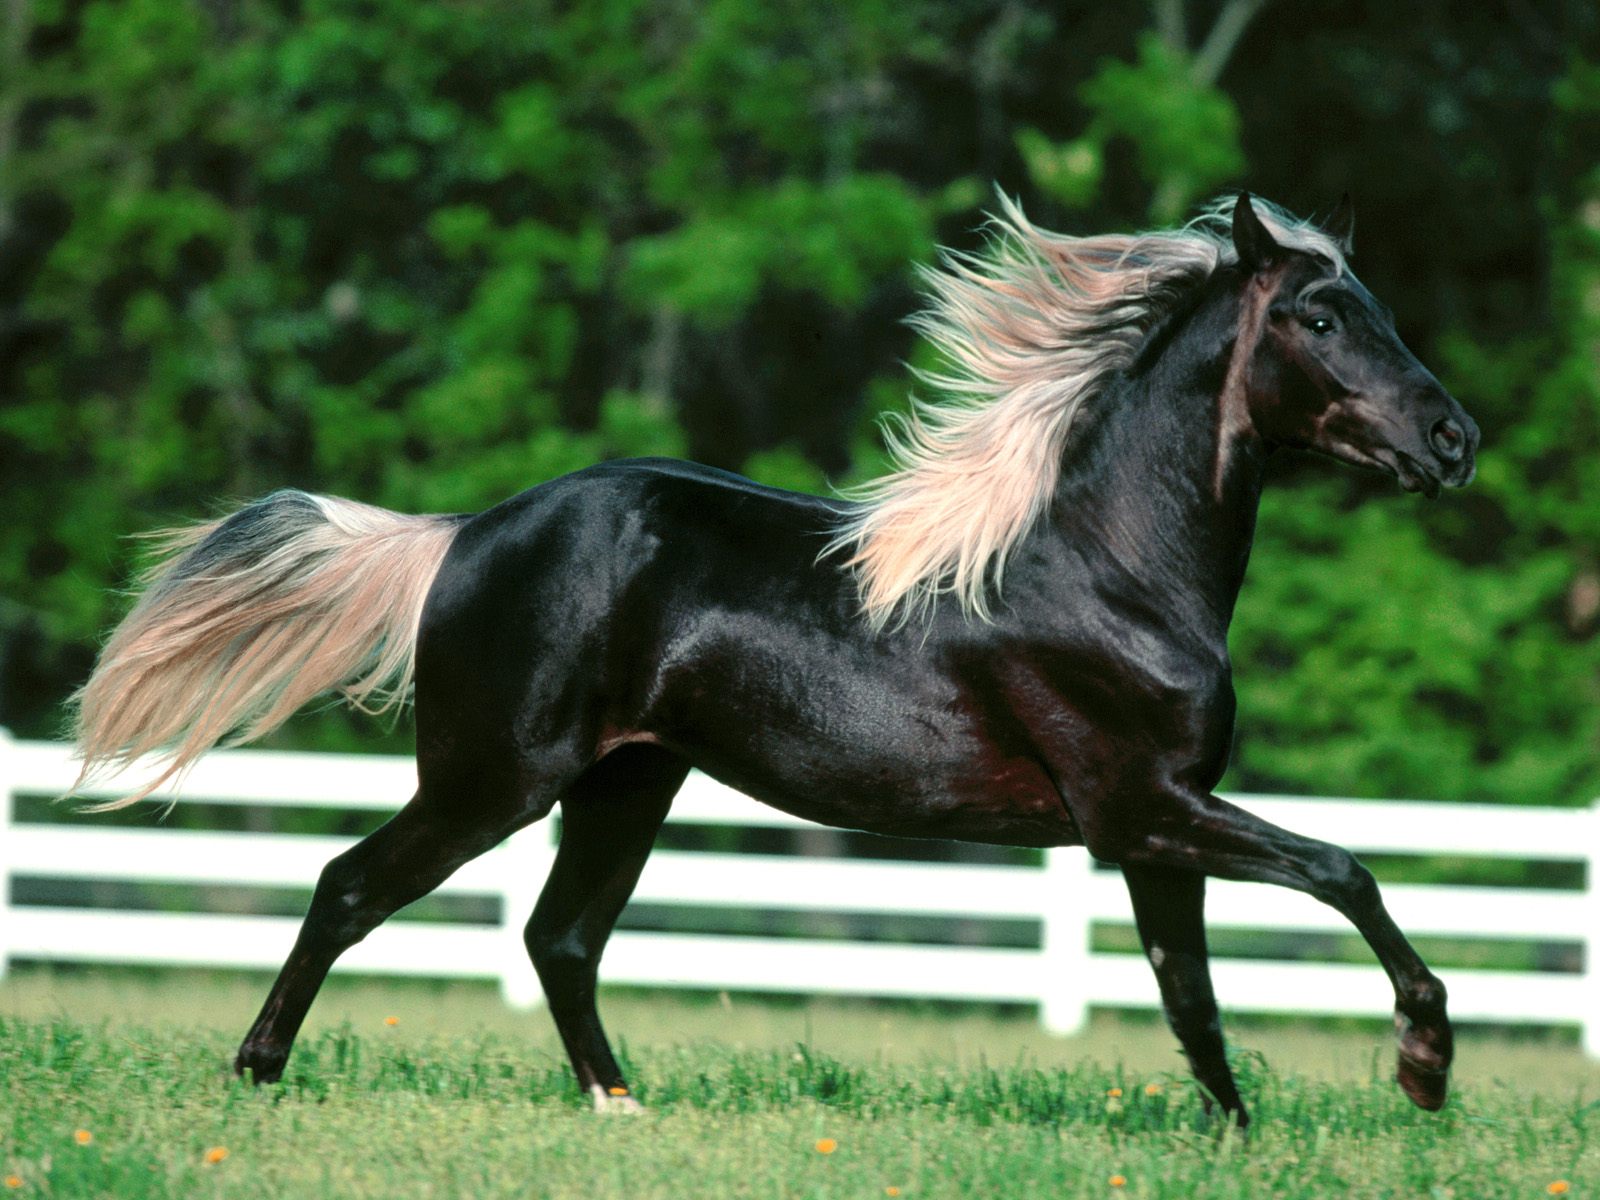 http://images5.fanpop.com/image/photos/28800000/Black-horse-animals-28894641-1600-1200.jpg